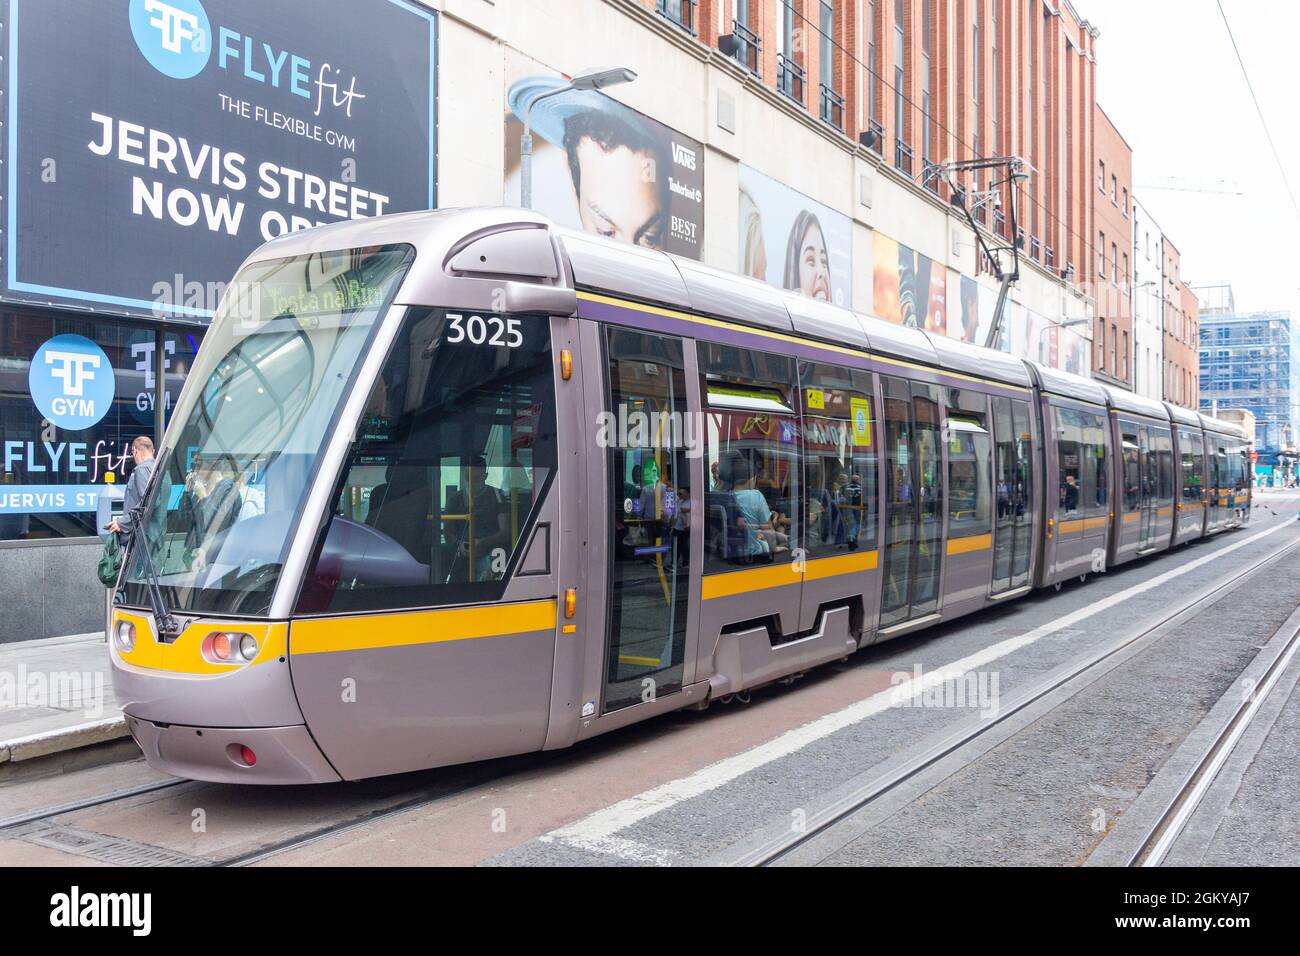 Luas tram/light rail transport system, Strand Street Great, Dublin, Republic of Ireland Stock Photo